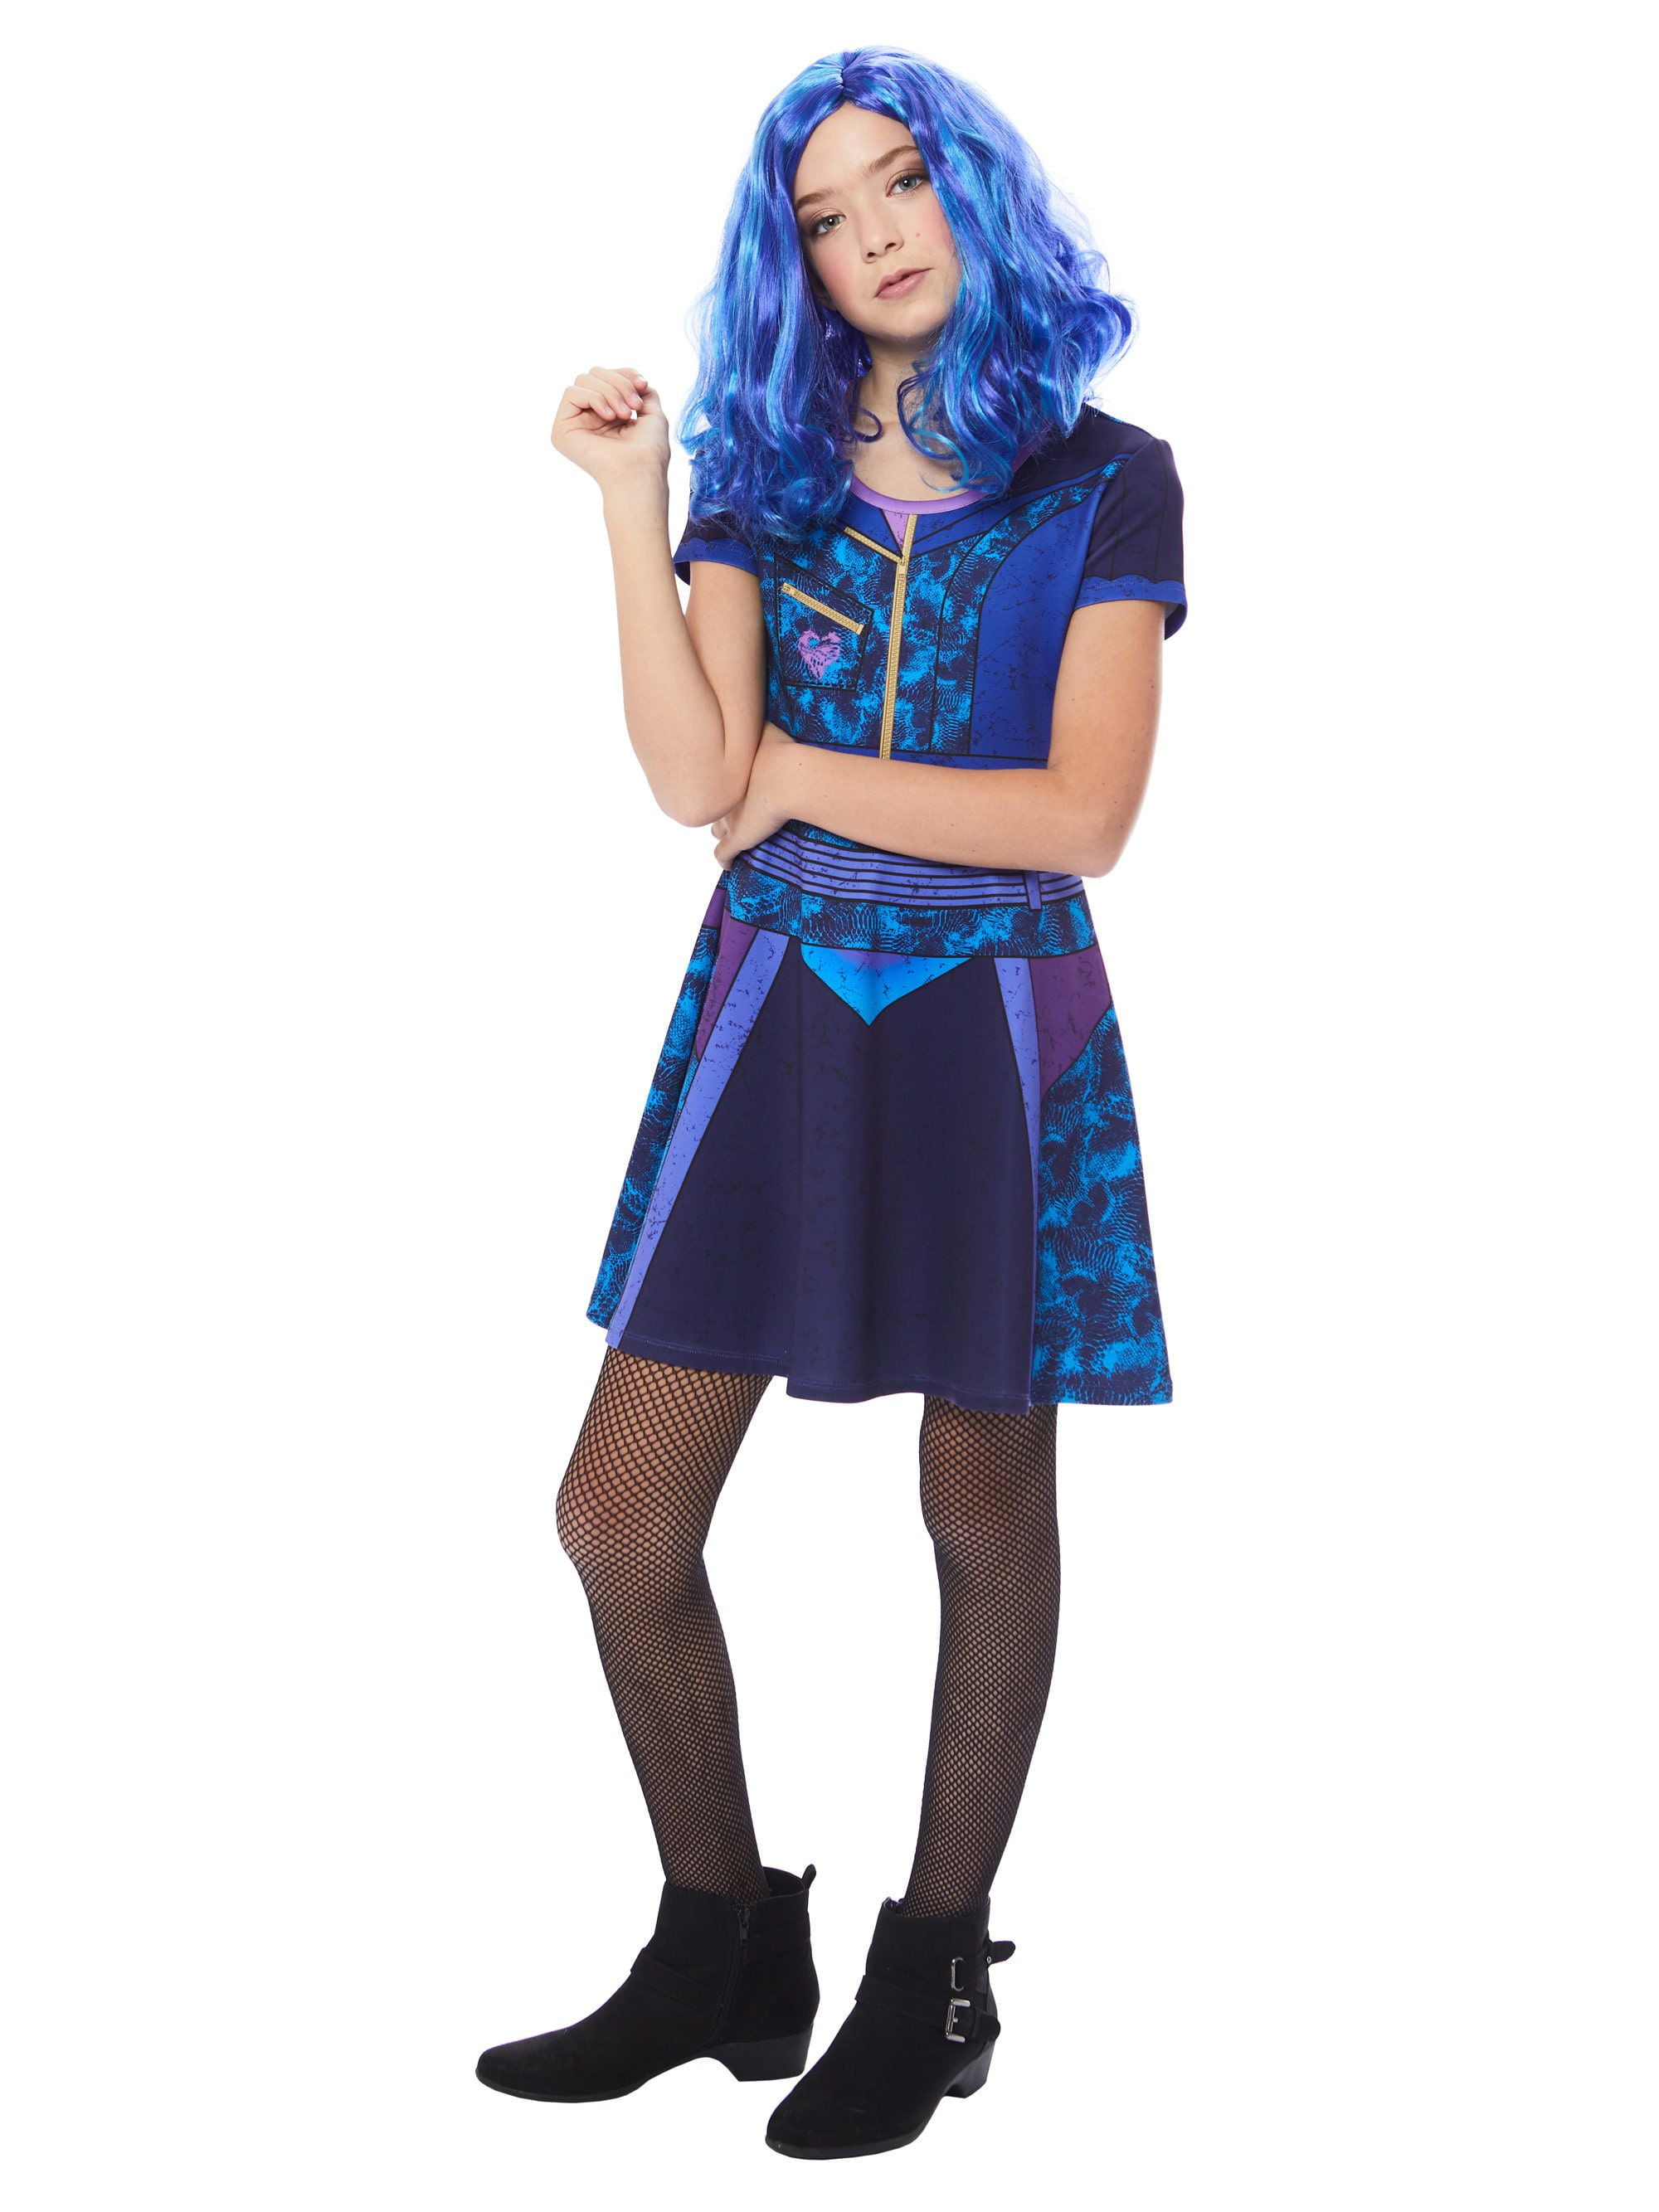 Childs Girl's Deluxe Disney Descendants 3 Evie Costume 